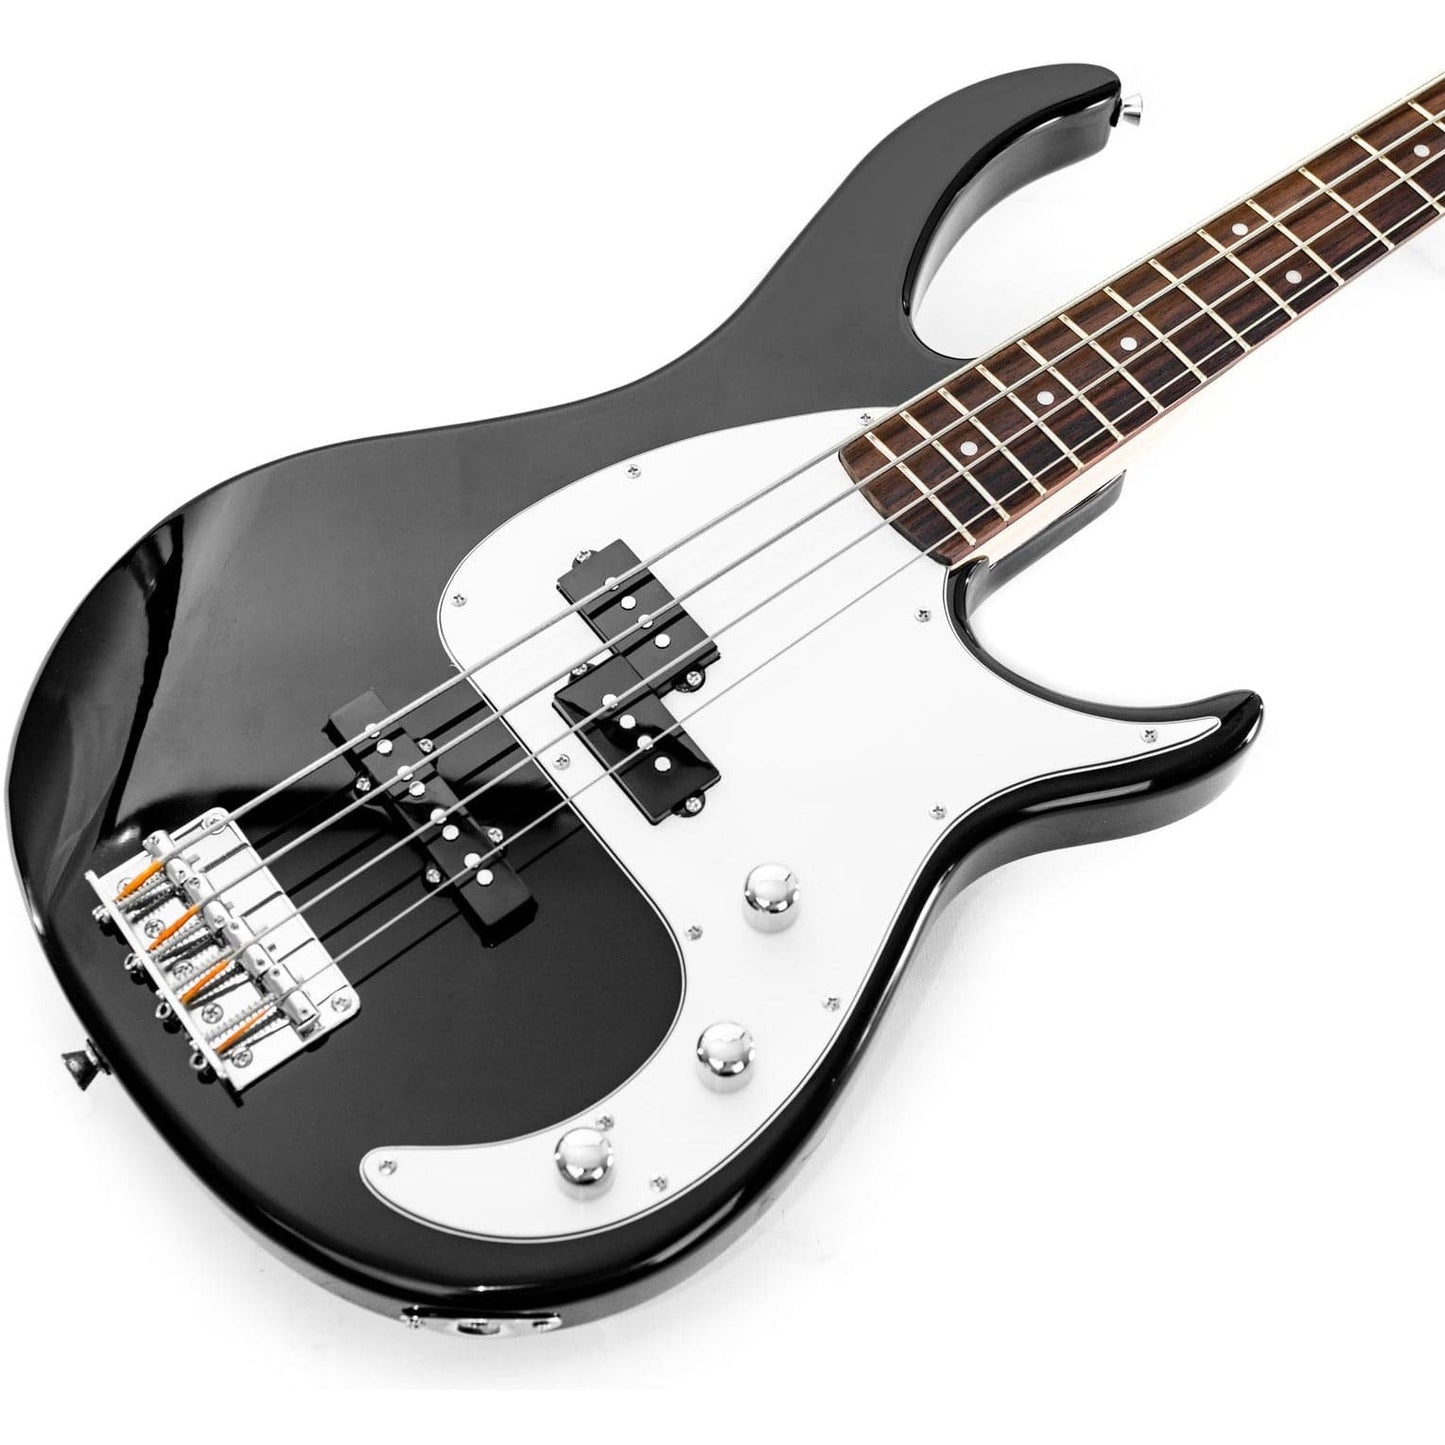 Peavey Milestone Series 4 String Bass Guitar in Black